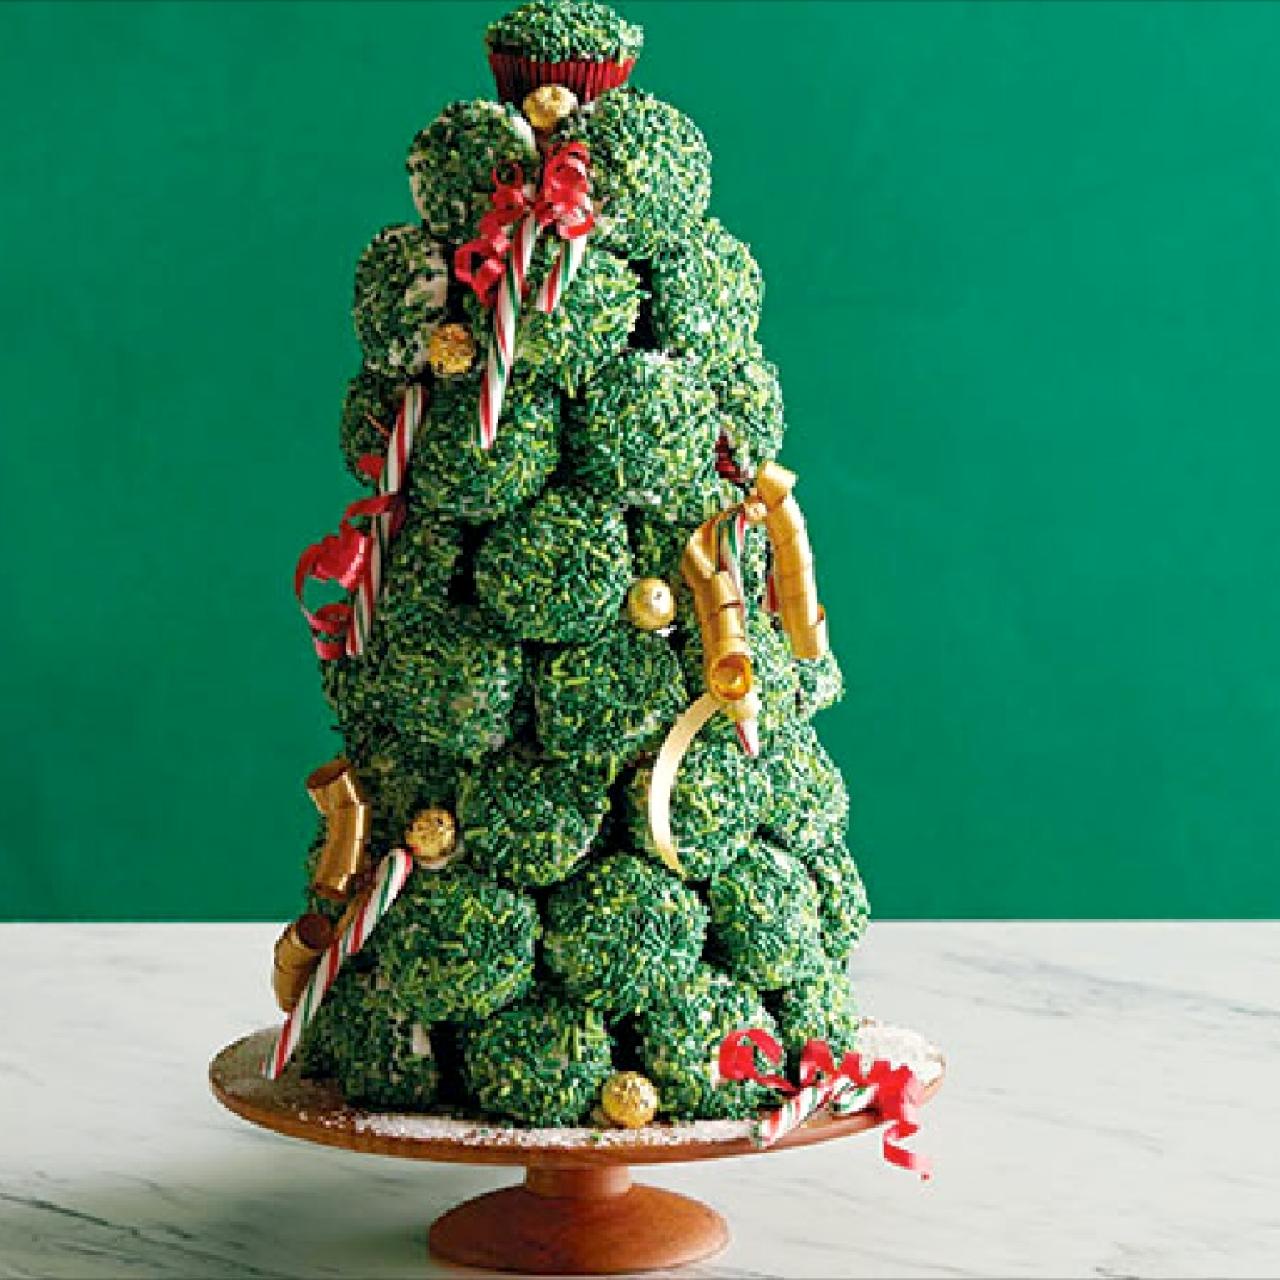 https://food.fnr.sndimg.com/content/dam/images/food/fullset/2013/7/5/0/GALE-GAND_Cupcake-Christmas-Tree_s4x3.jpg.rend.hgtvcom.1280.1280.suffix/1375578049290.jpeg